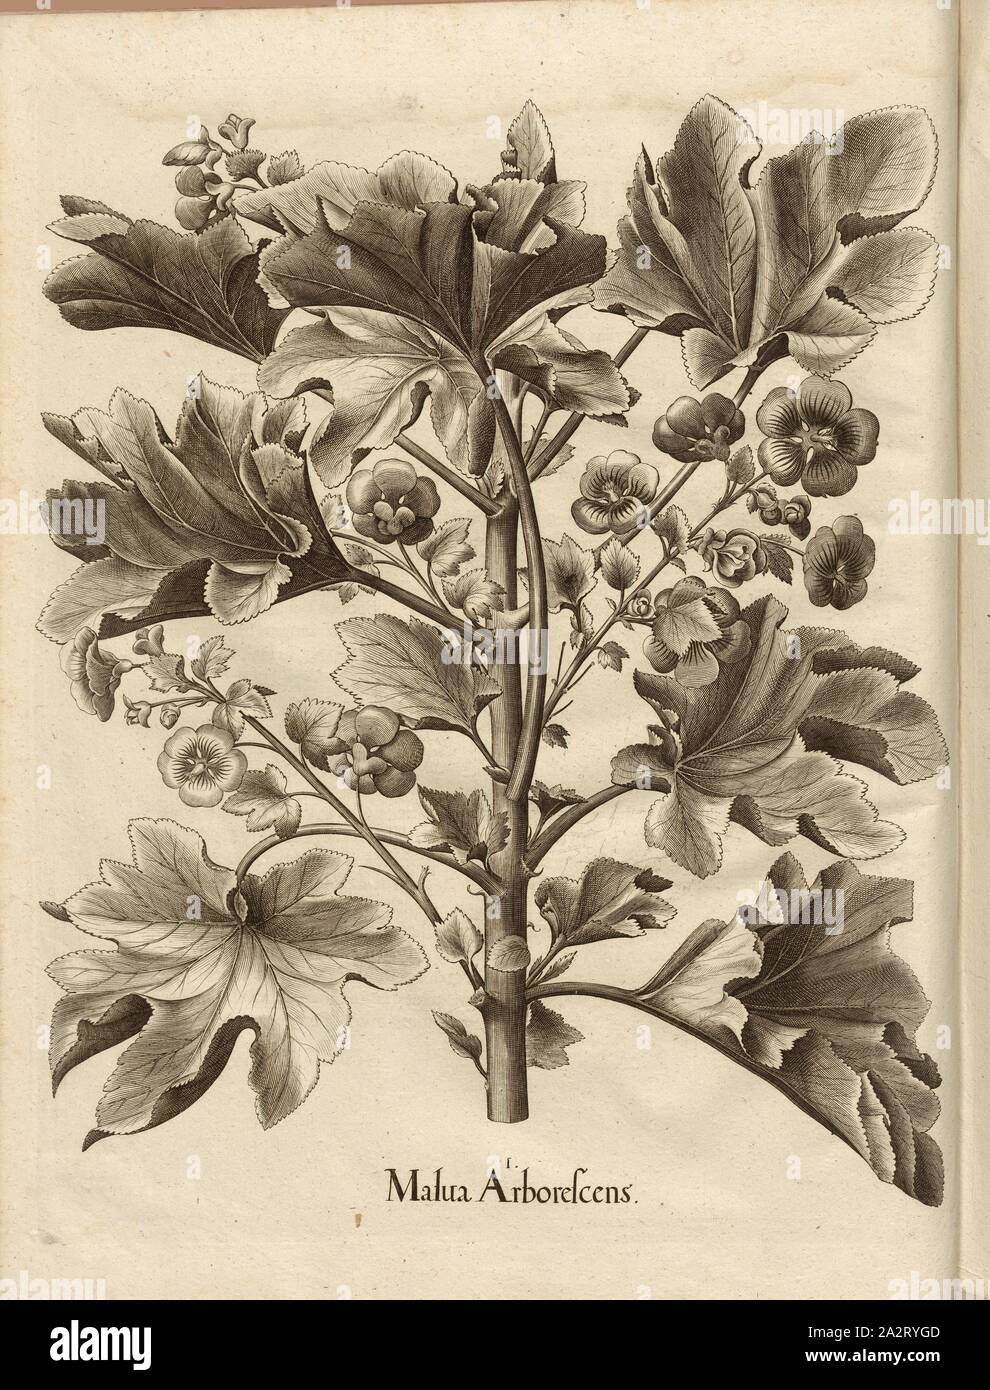 Malua arborescens, Copperplate, p. 486, Besler, Basilius; Jungermann, Ludwig, 1713, Basilius Besler: Hortus Eystettensis (...). Nürnberg, 1713 Stock Photo